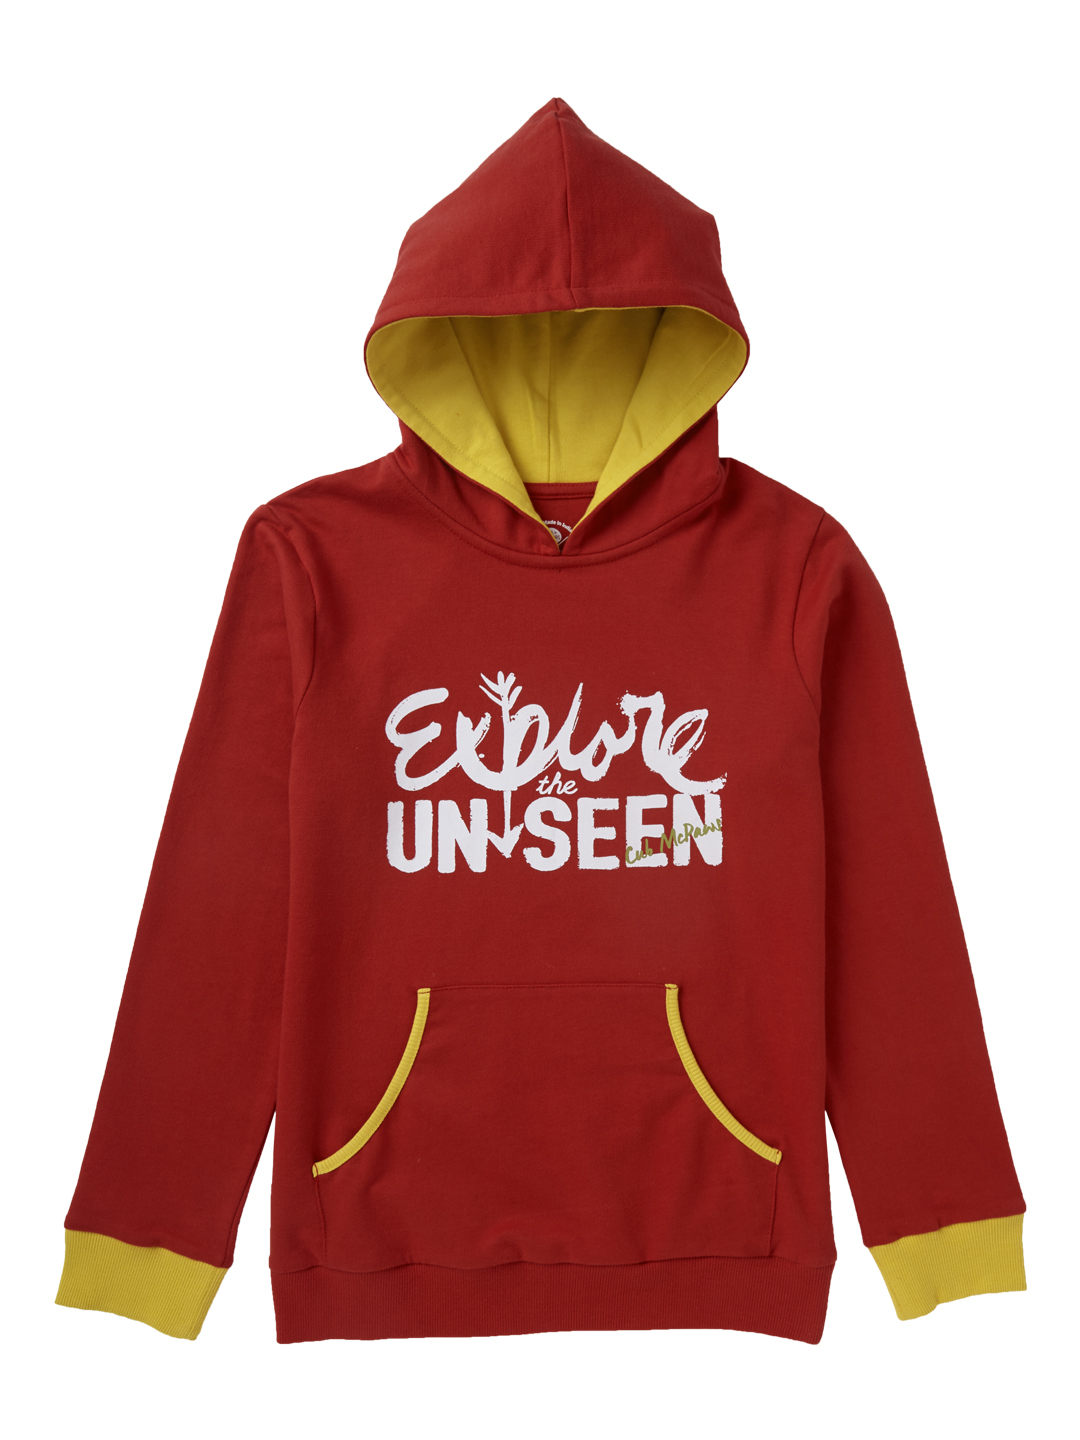 Boys Red Hooded Sweatshirt Shop Online @ Cub McPaws